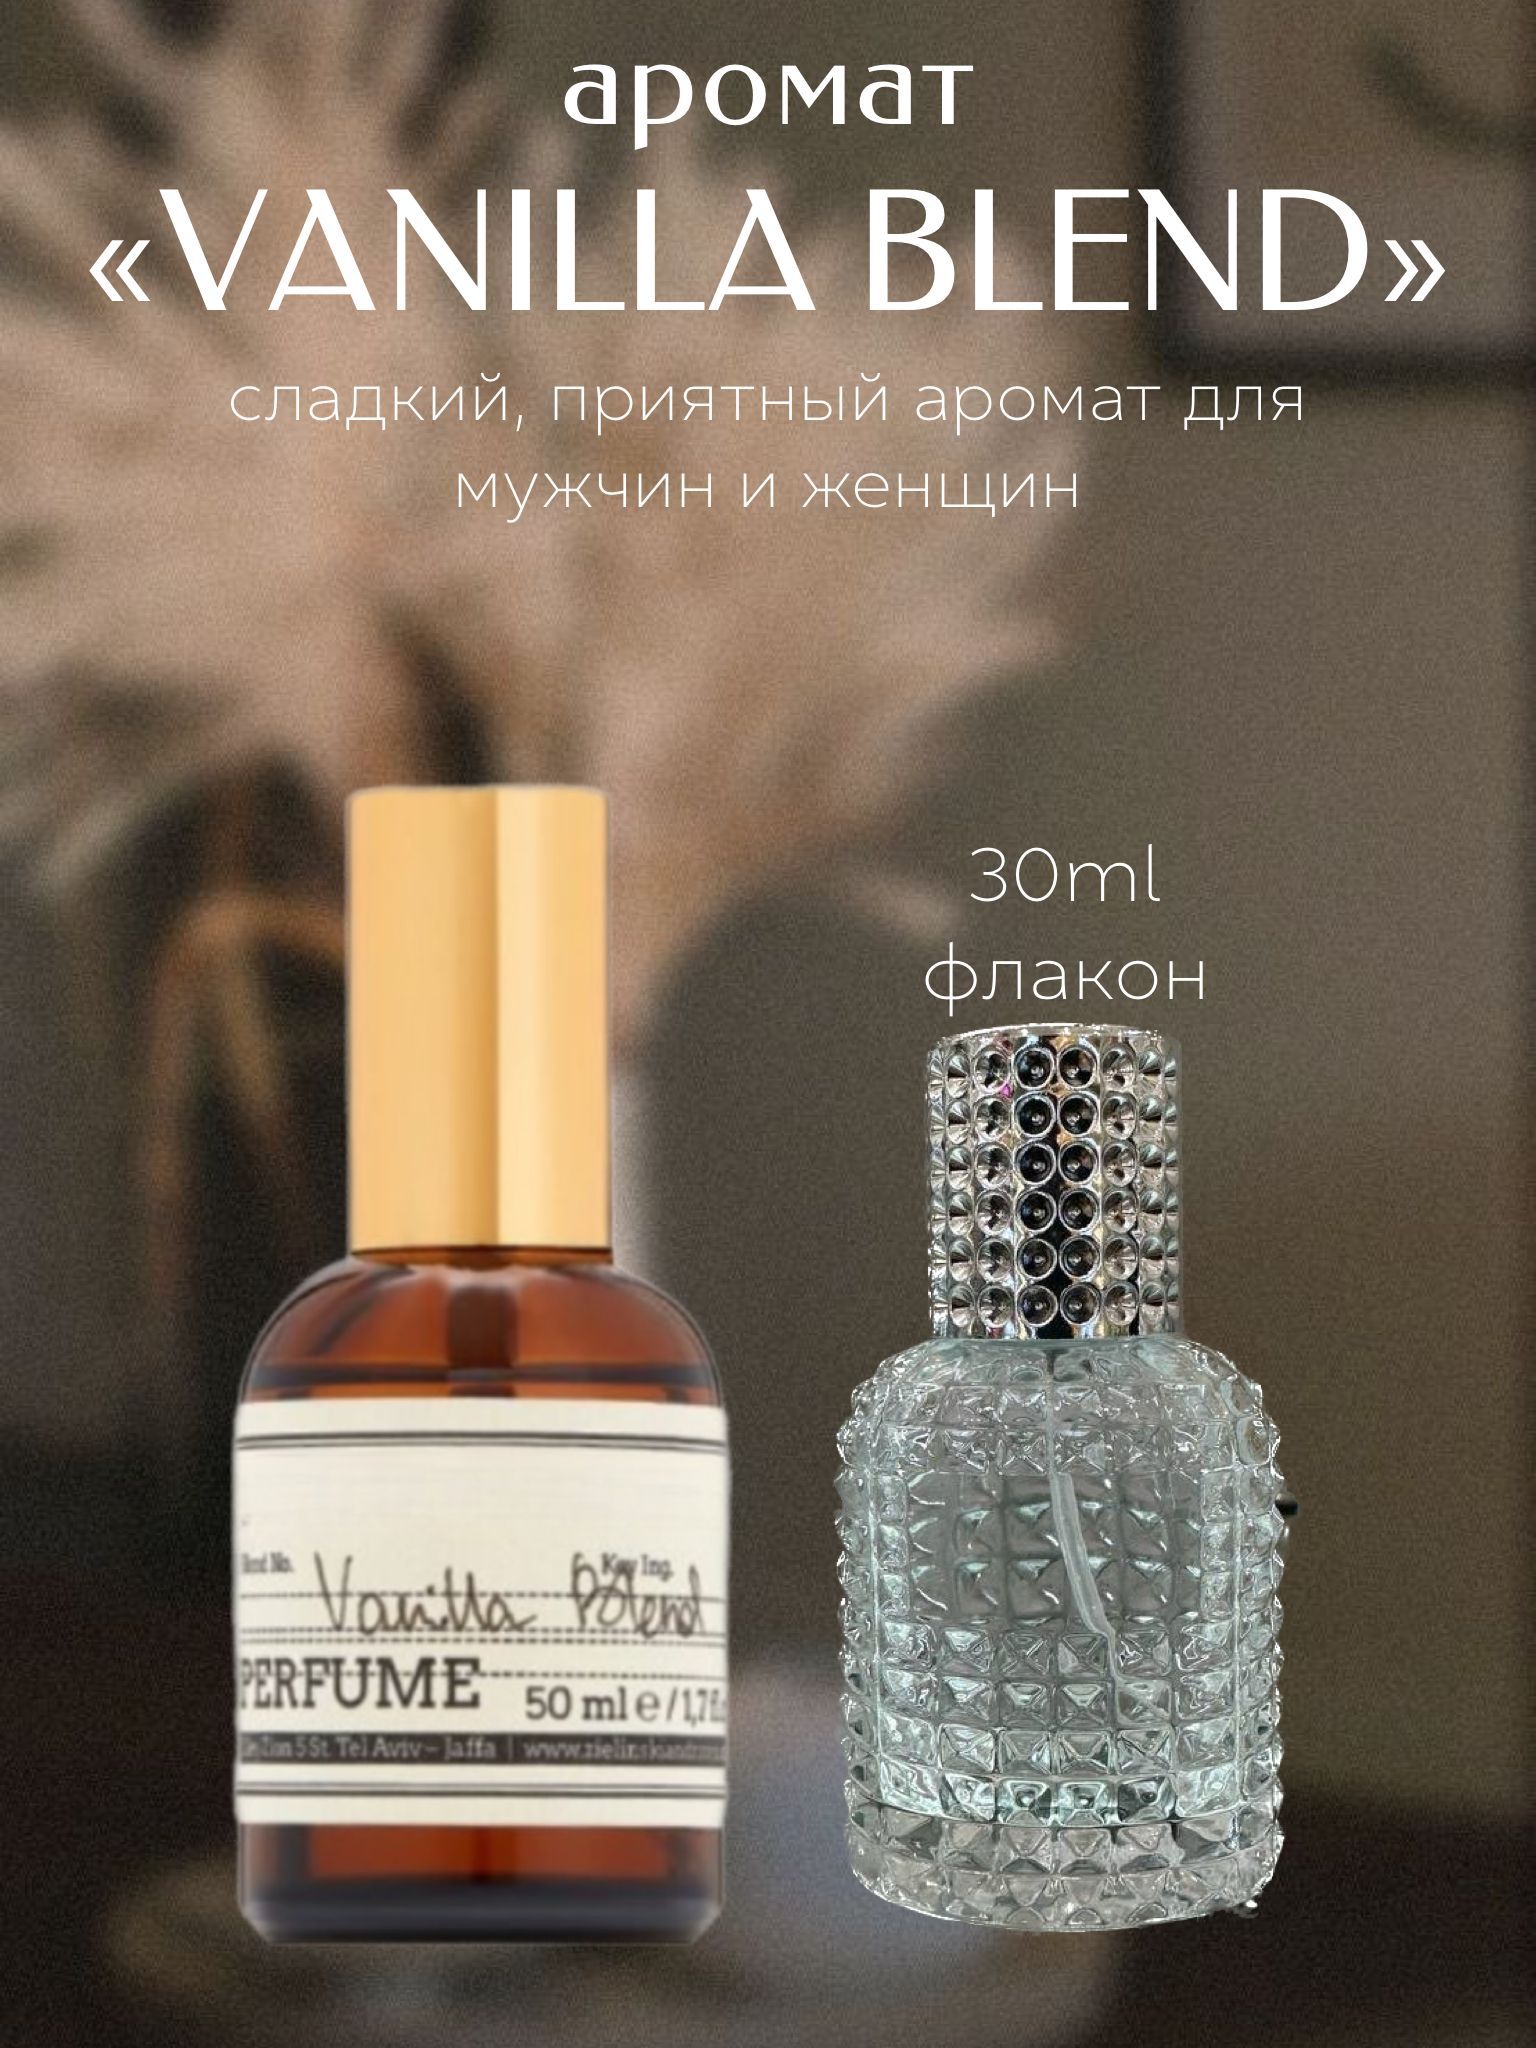 Vanilla blend духи отзывы. Ванила Бленд. Vanilla Blend туалетная вода. Vanilla Blend духи описание. Zilencki духи Vanilla Blend.